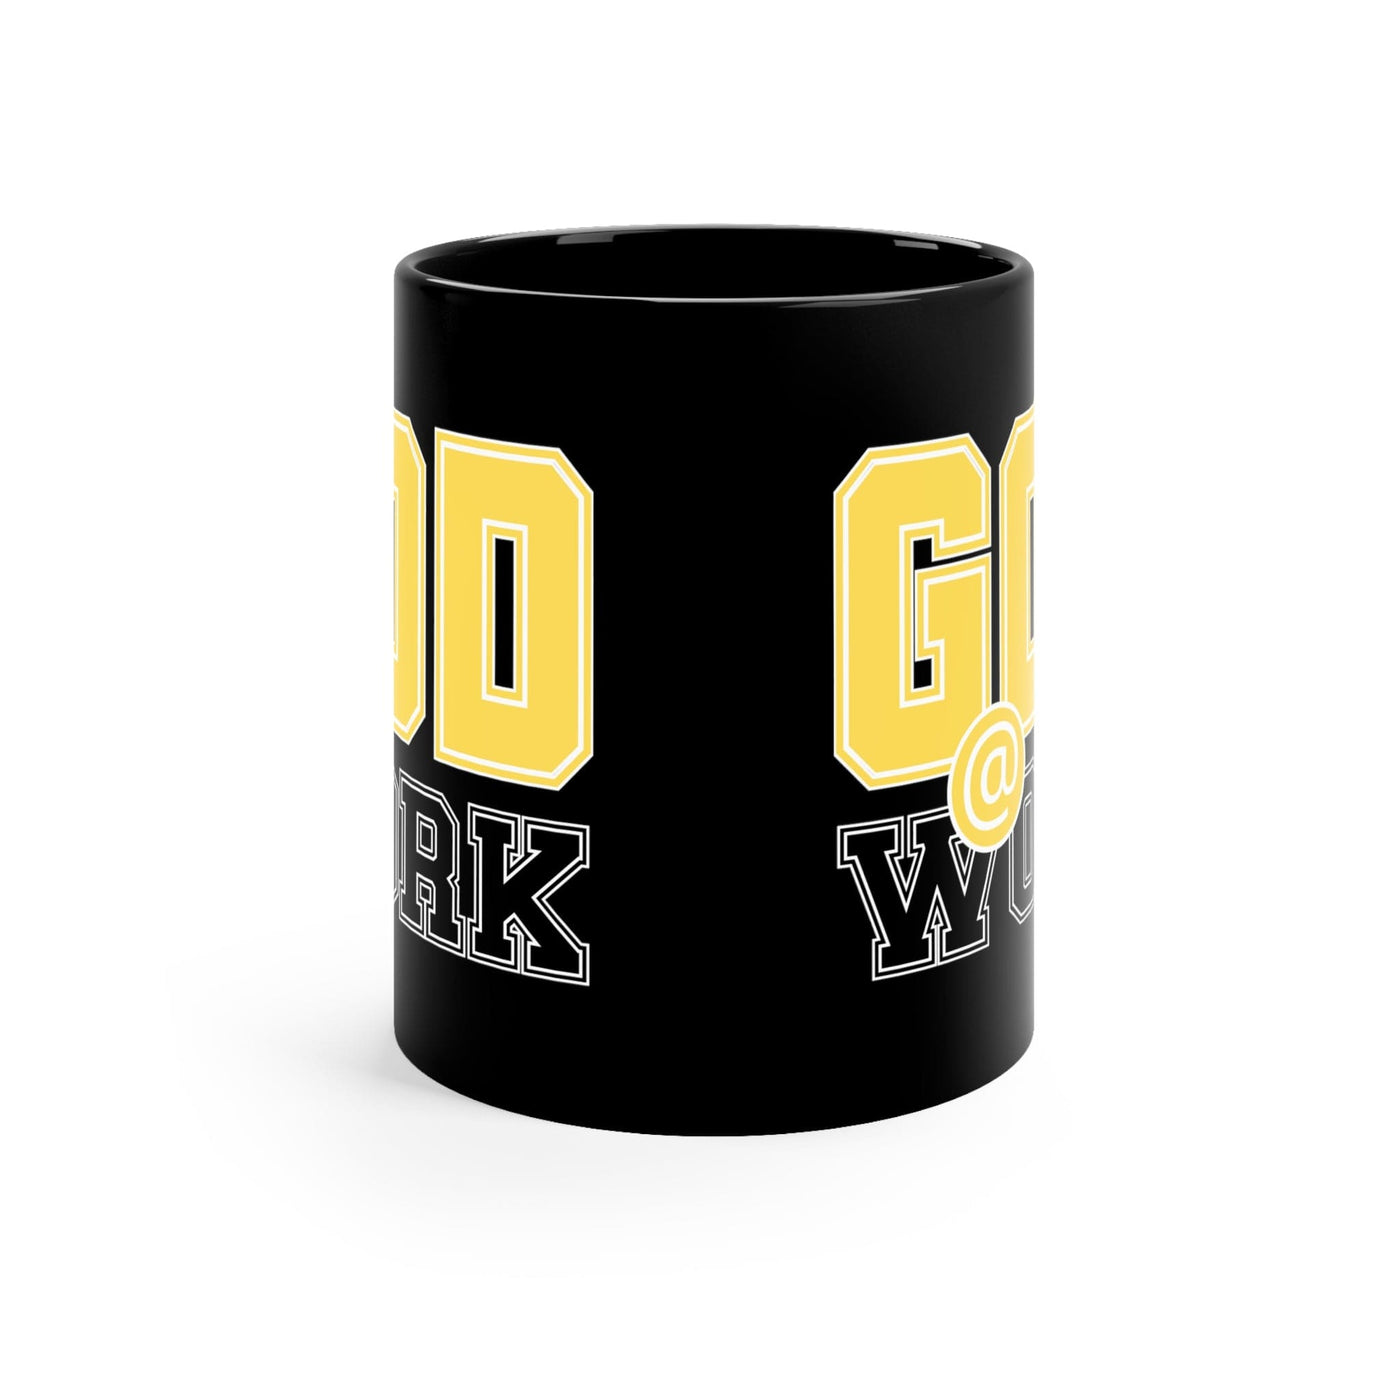 Black Ceramic Mug - 11oz God @ Work Yellow And Print Decorative | Mugs